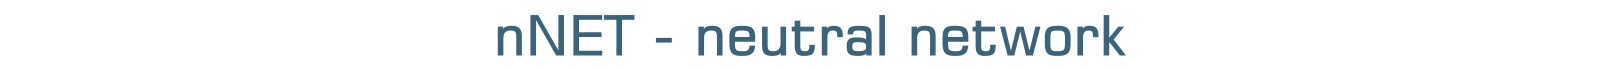 nNET neutral network - REUTTER » innovation & network - nNET Innovationsnetzwerk